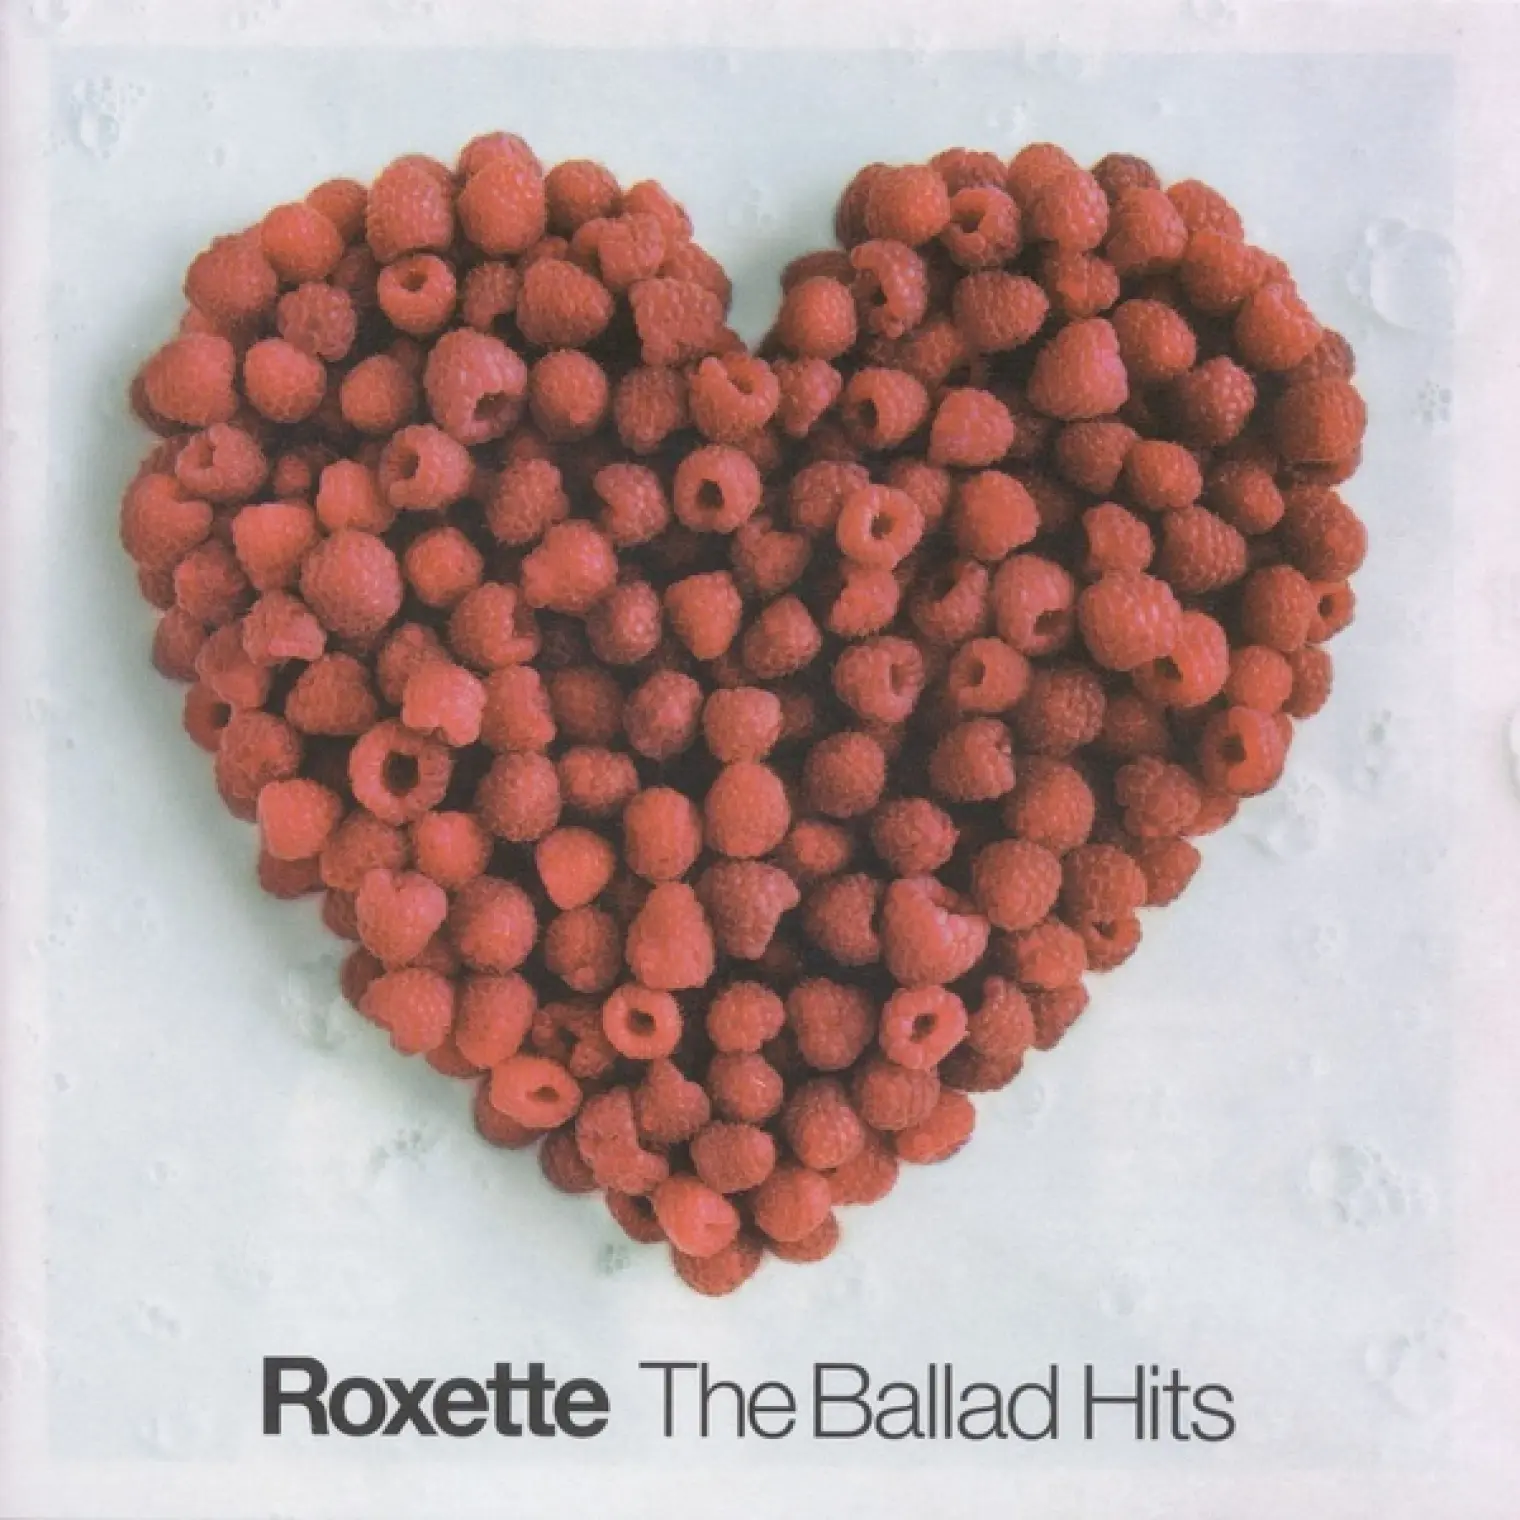 The Ballad Hits -  Roxette 